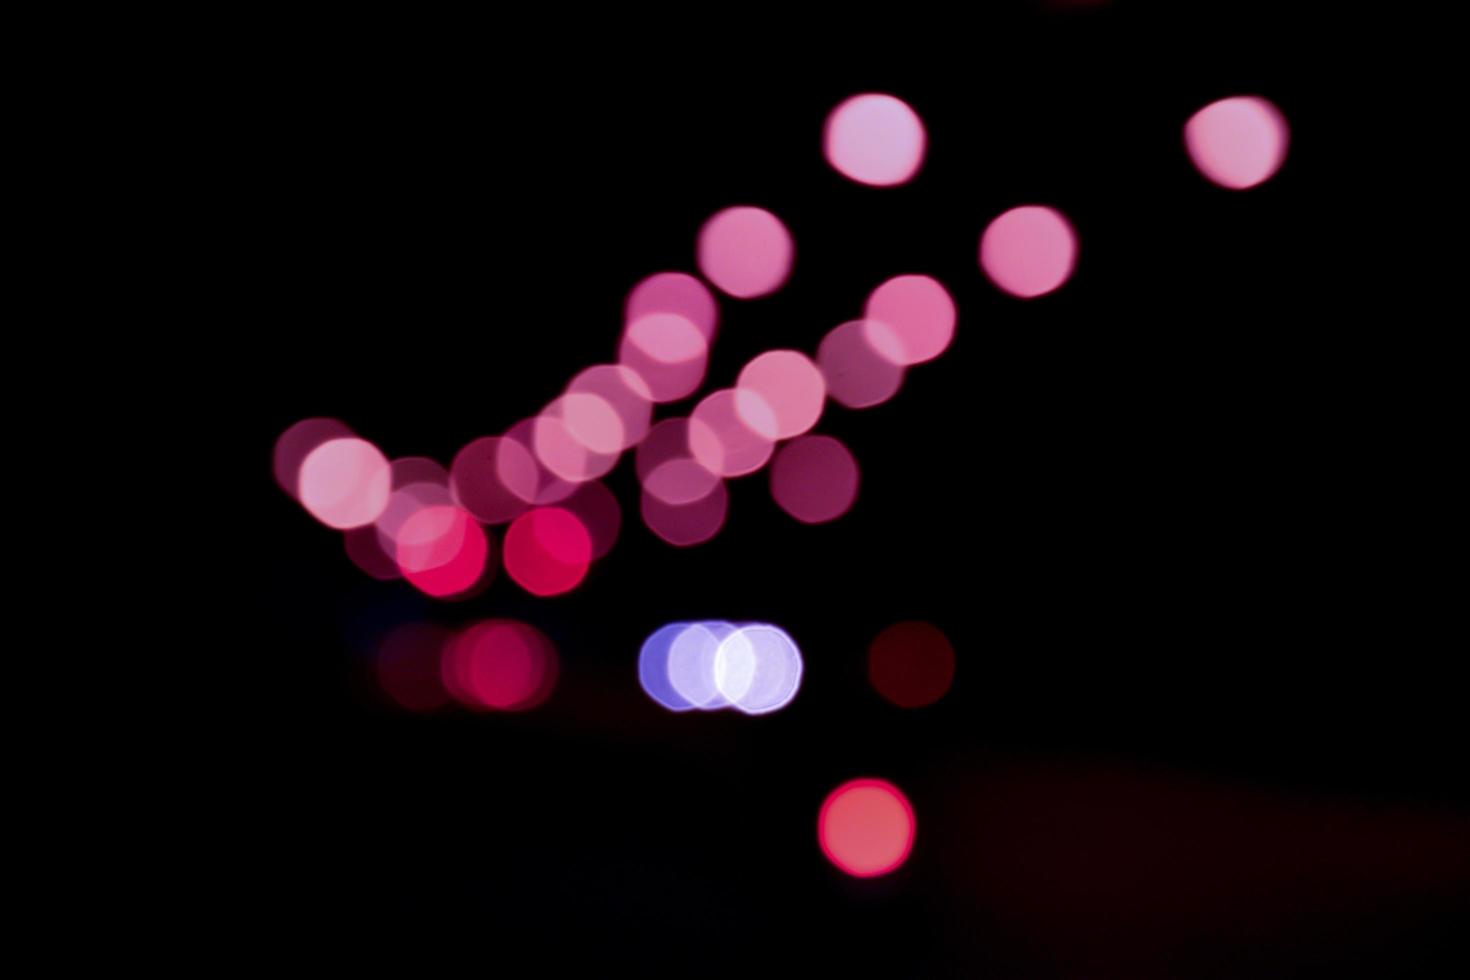 bokeh luz de rua à noite. foto